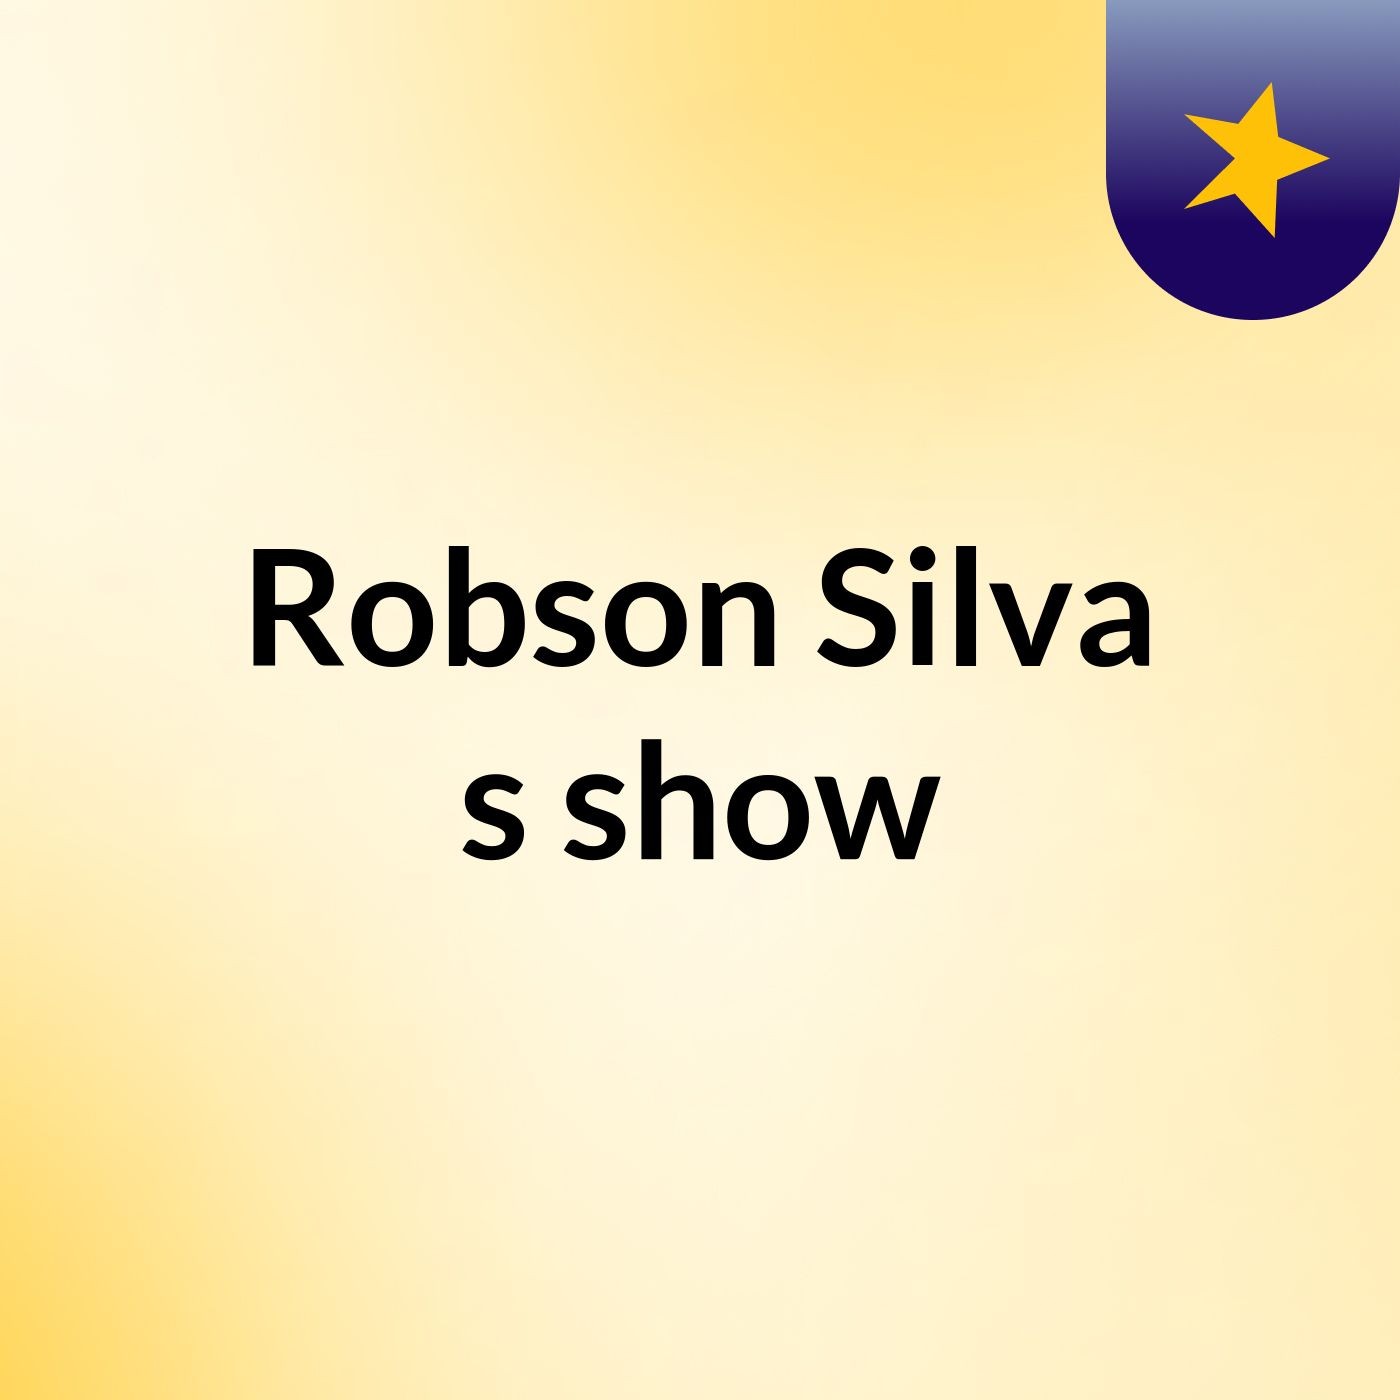 Robson Silva's show